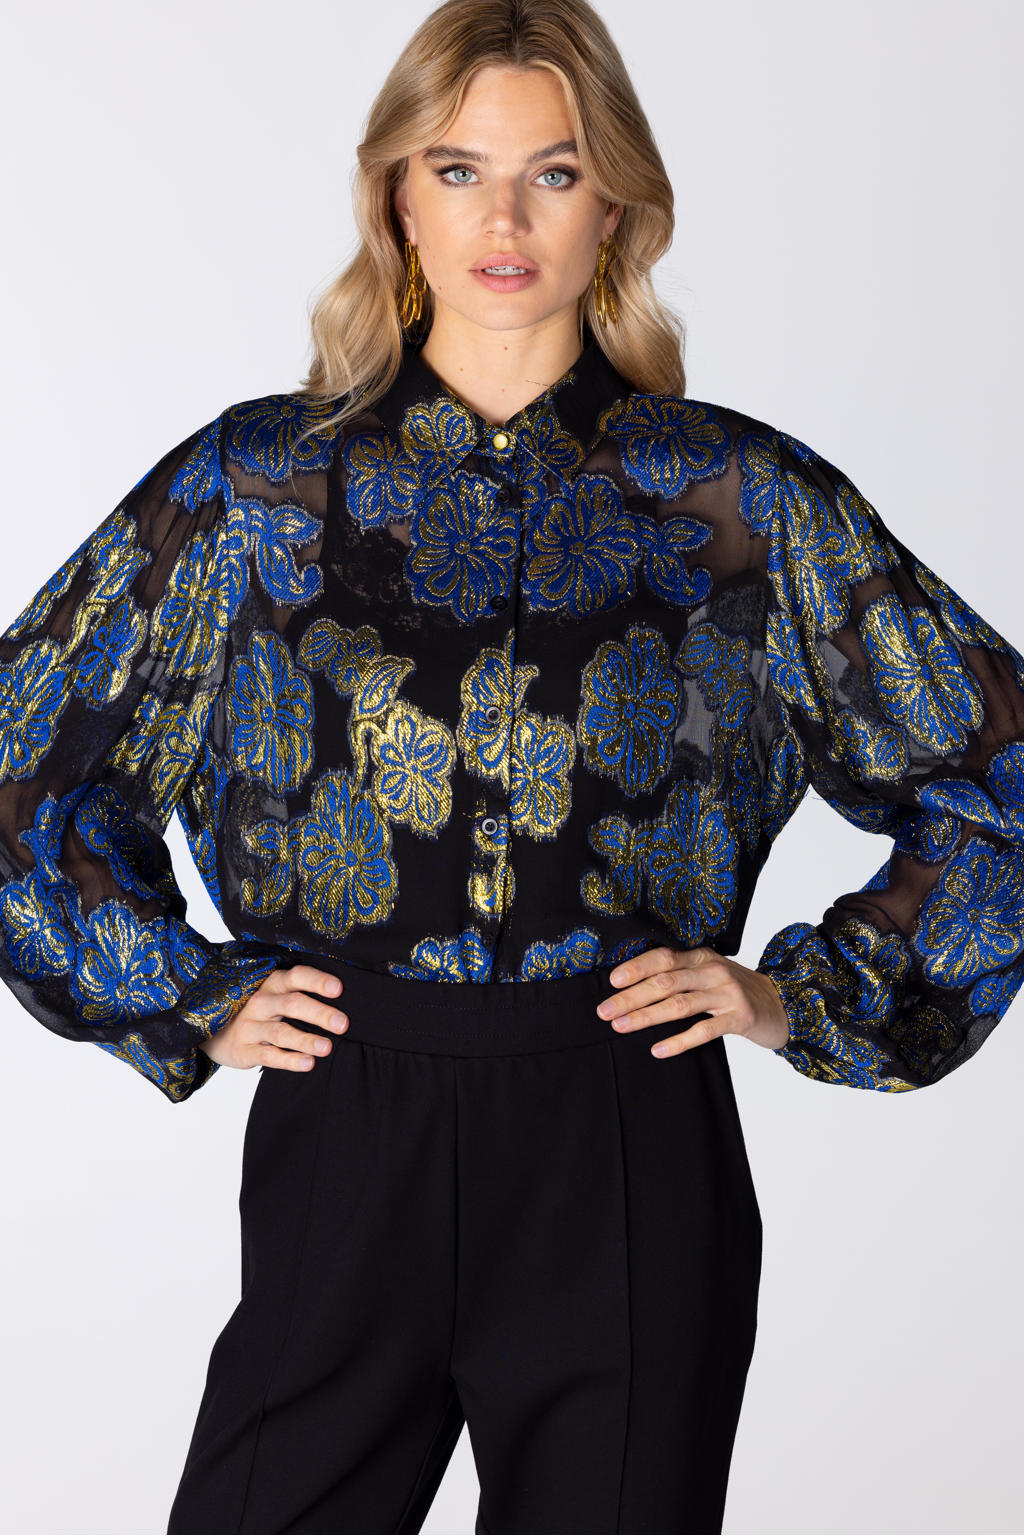 Juffrouw Jansen semi-transparante blouse Phoeby met all over print blauw/goud/zwart